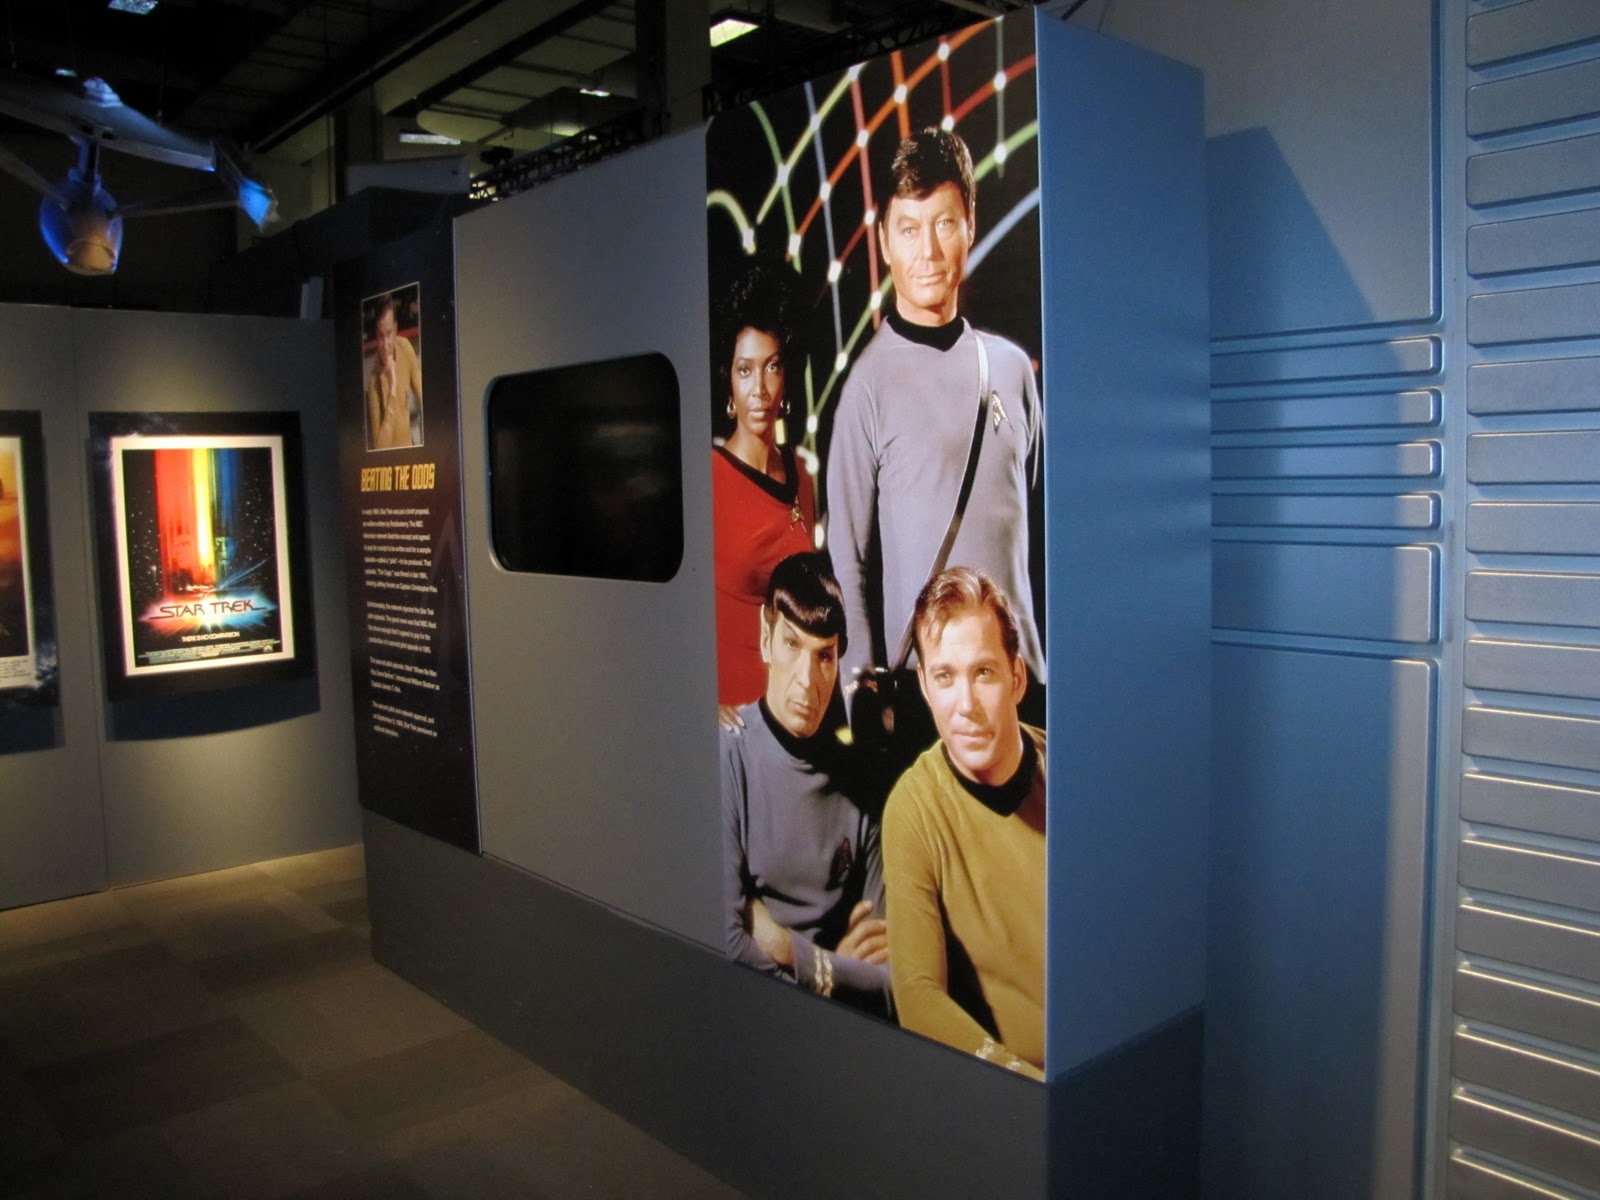 The Aero Experience Star Trek Exhibit Opens Tomorrow at St. Louis